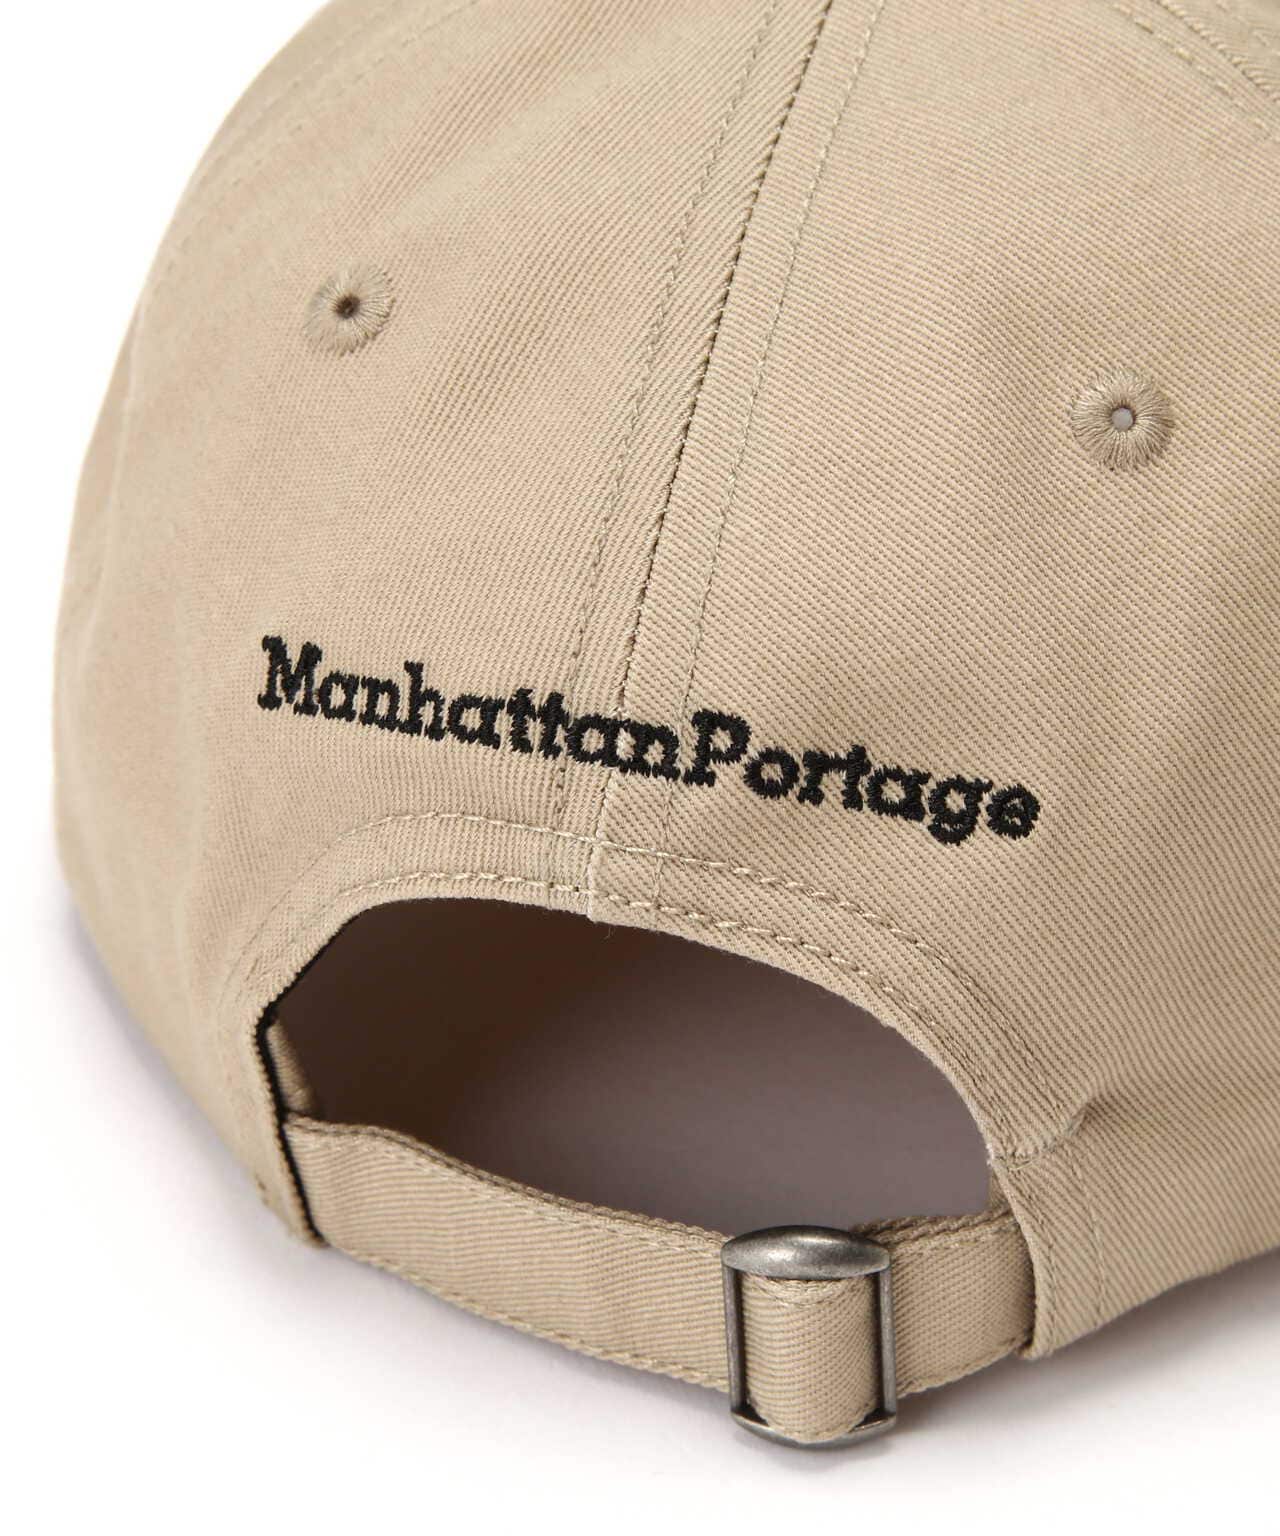 xManhattan Portage/マンハッタンポーテージ/6PANEL EMBROIDERY CAP/6パネル 刺繍キャップ